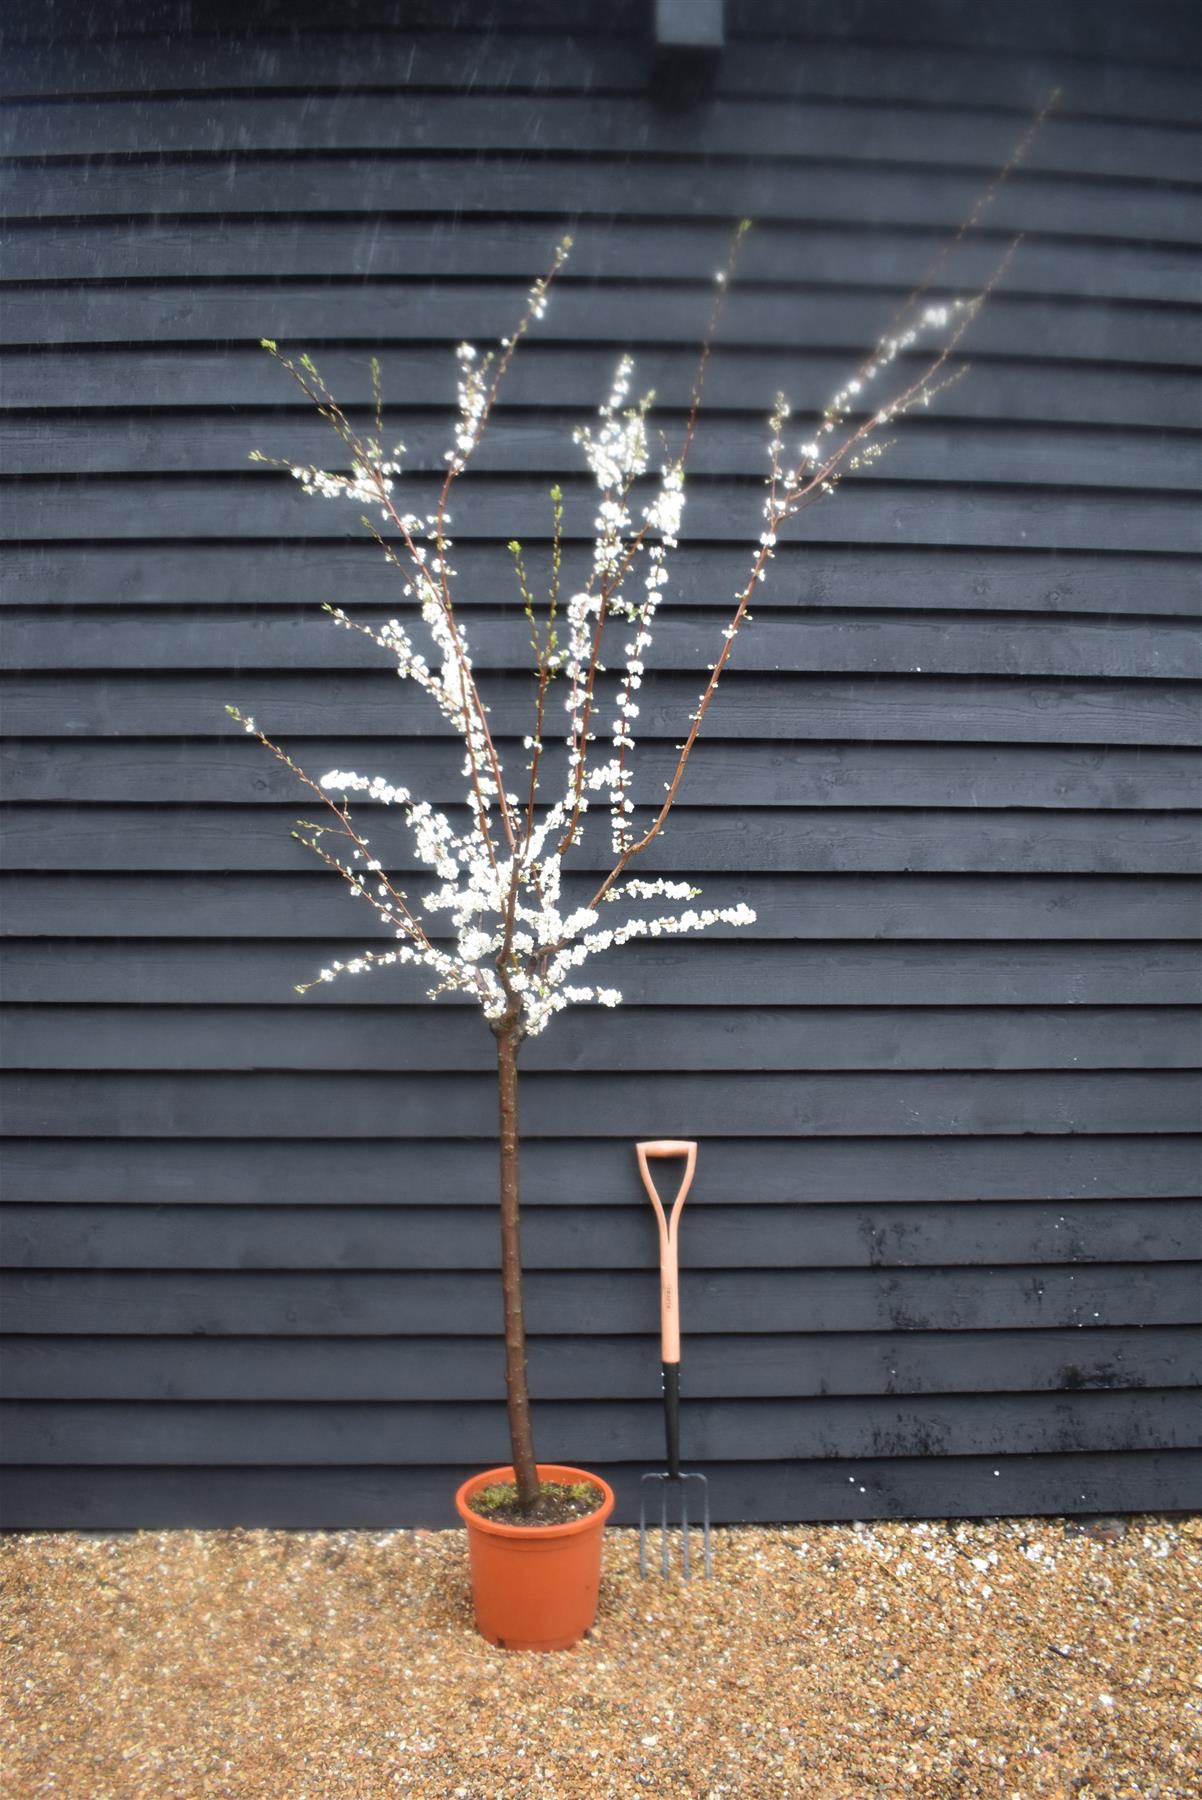 Plum tree 'Stanley' | Prunus domestica - 170-180cm - 30lt